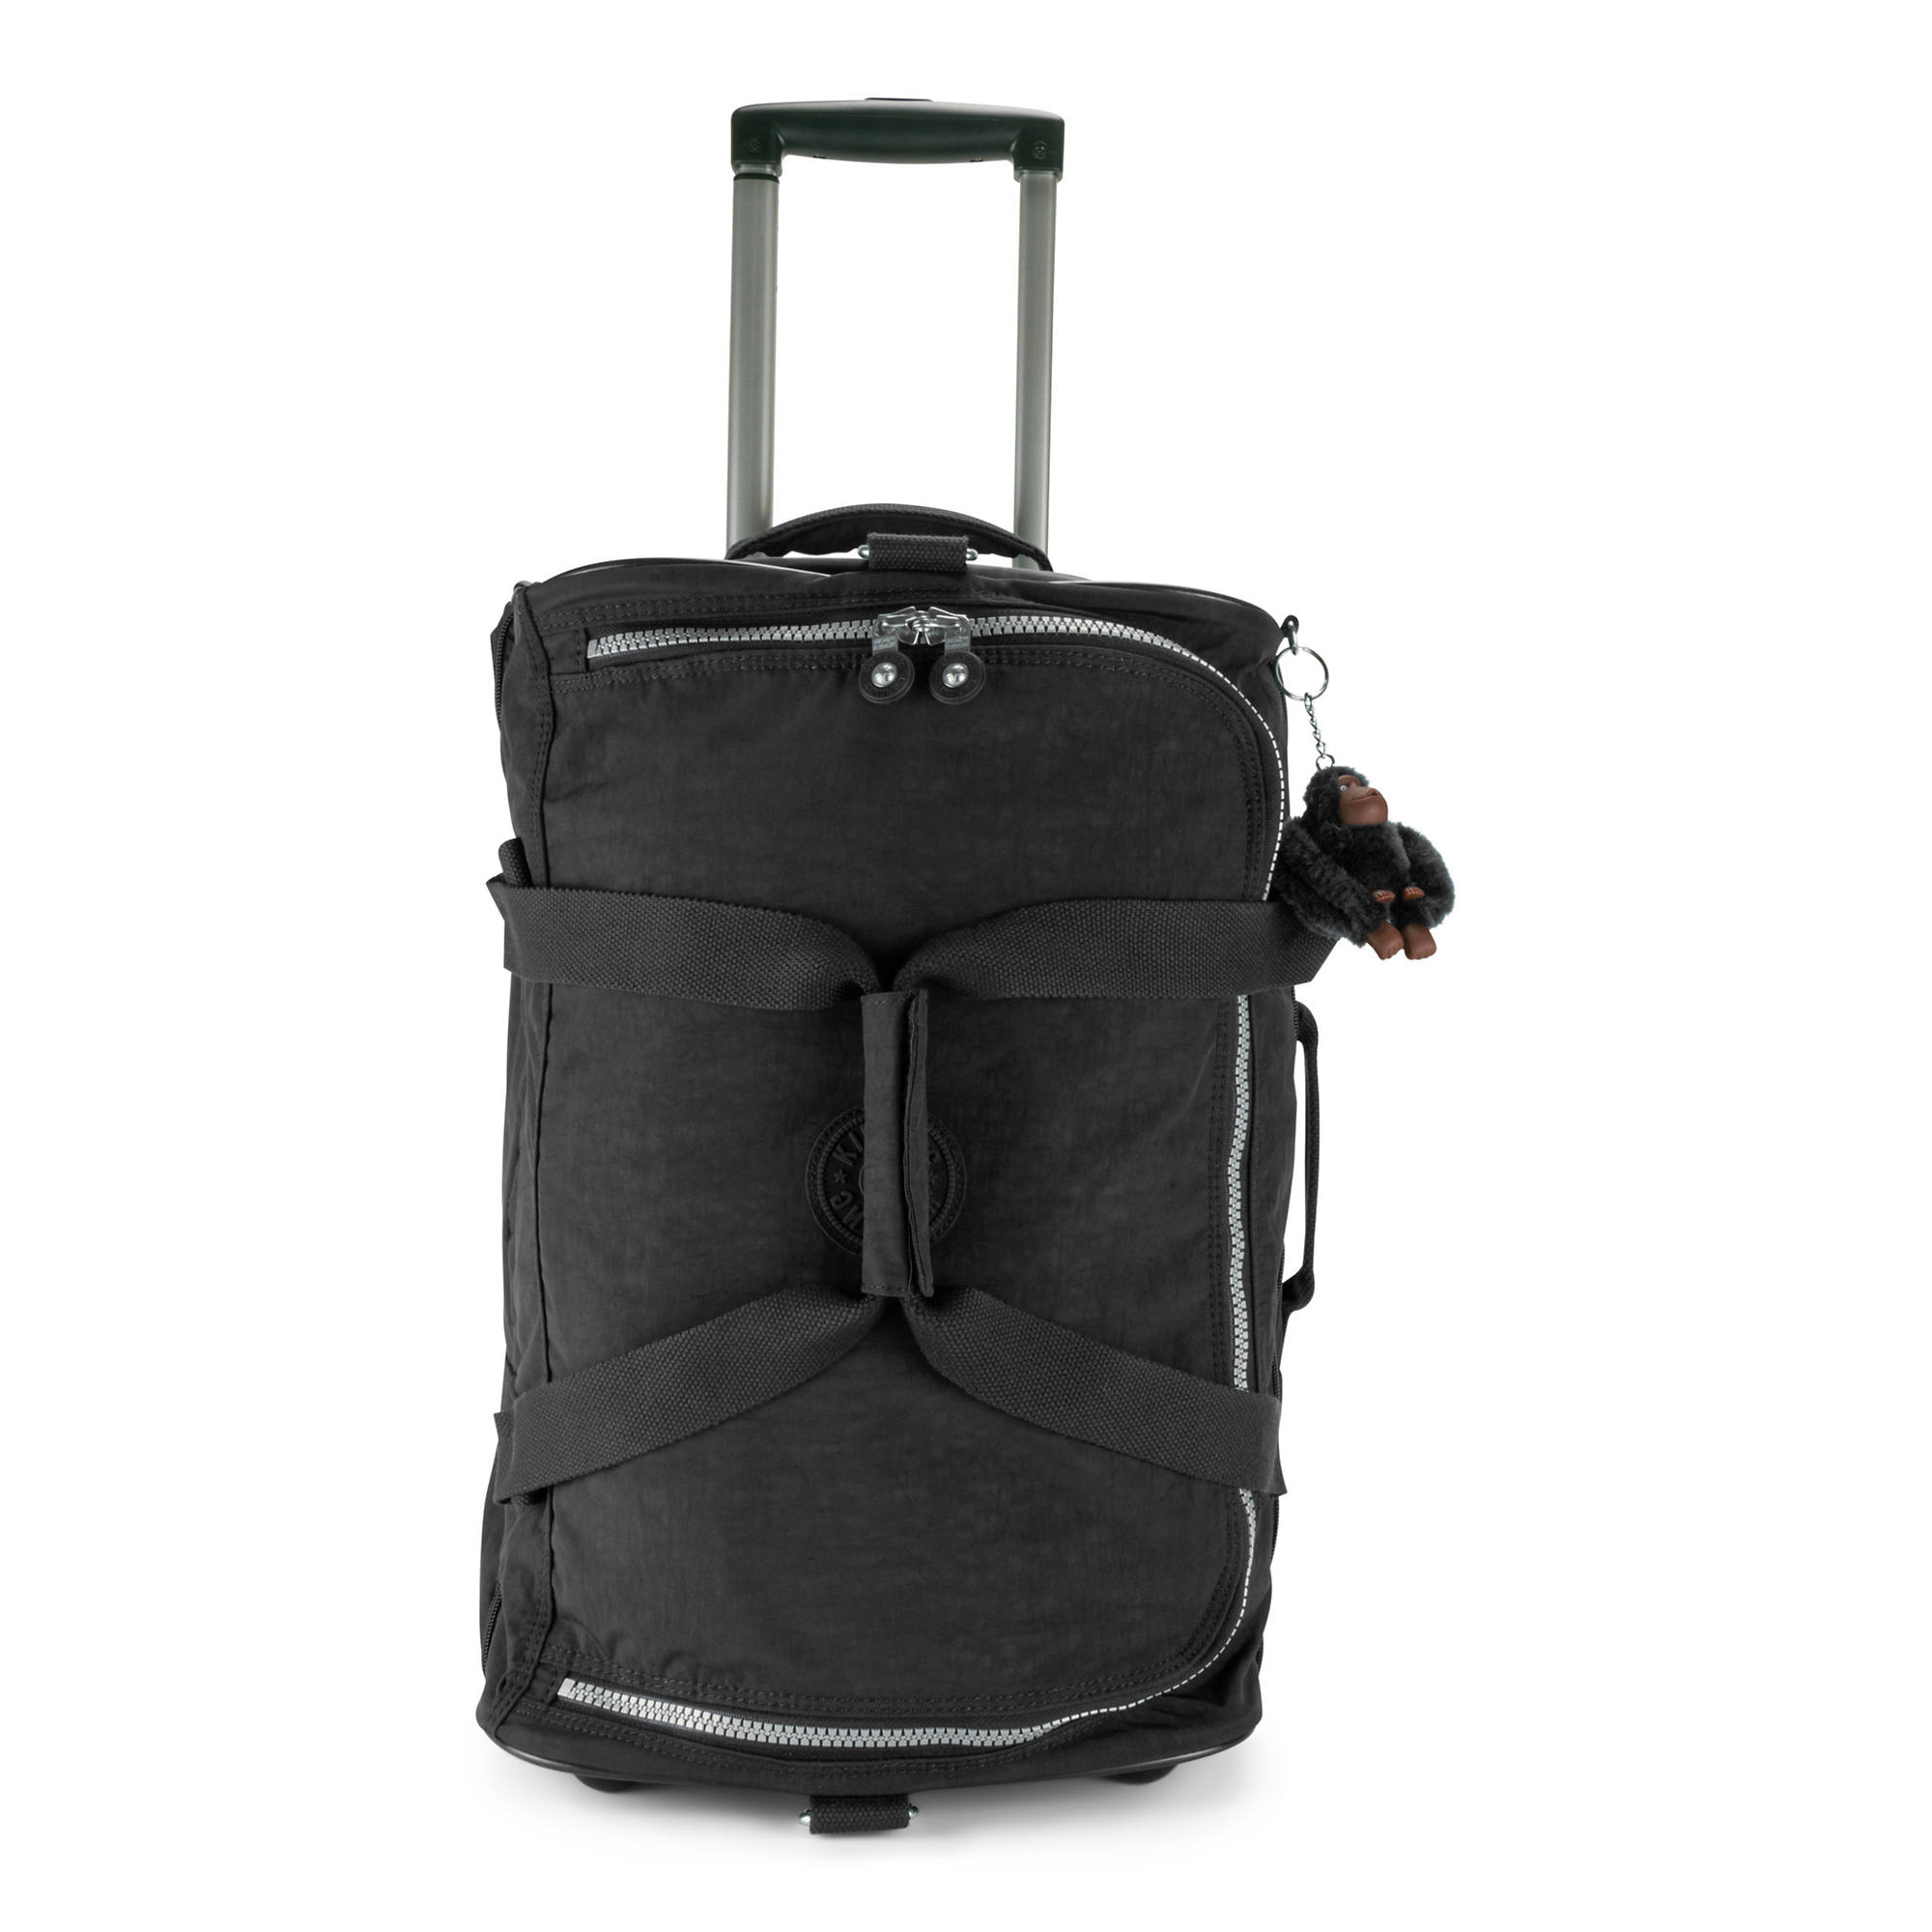 Teagan Small Wheeled Luggage,Black,large-zoomed